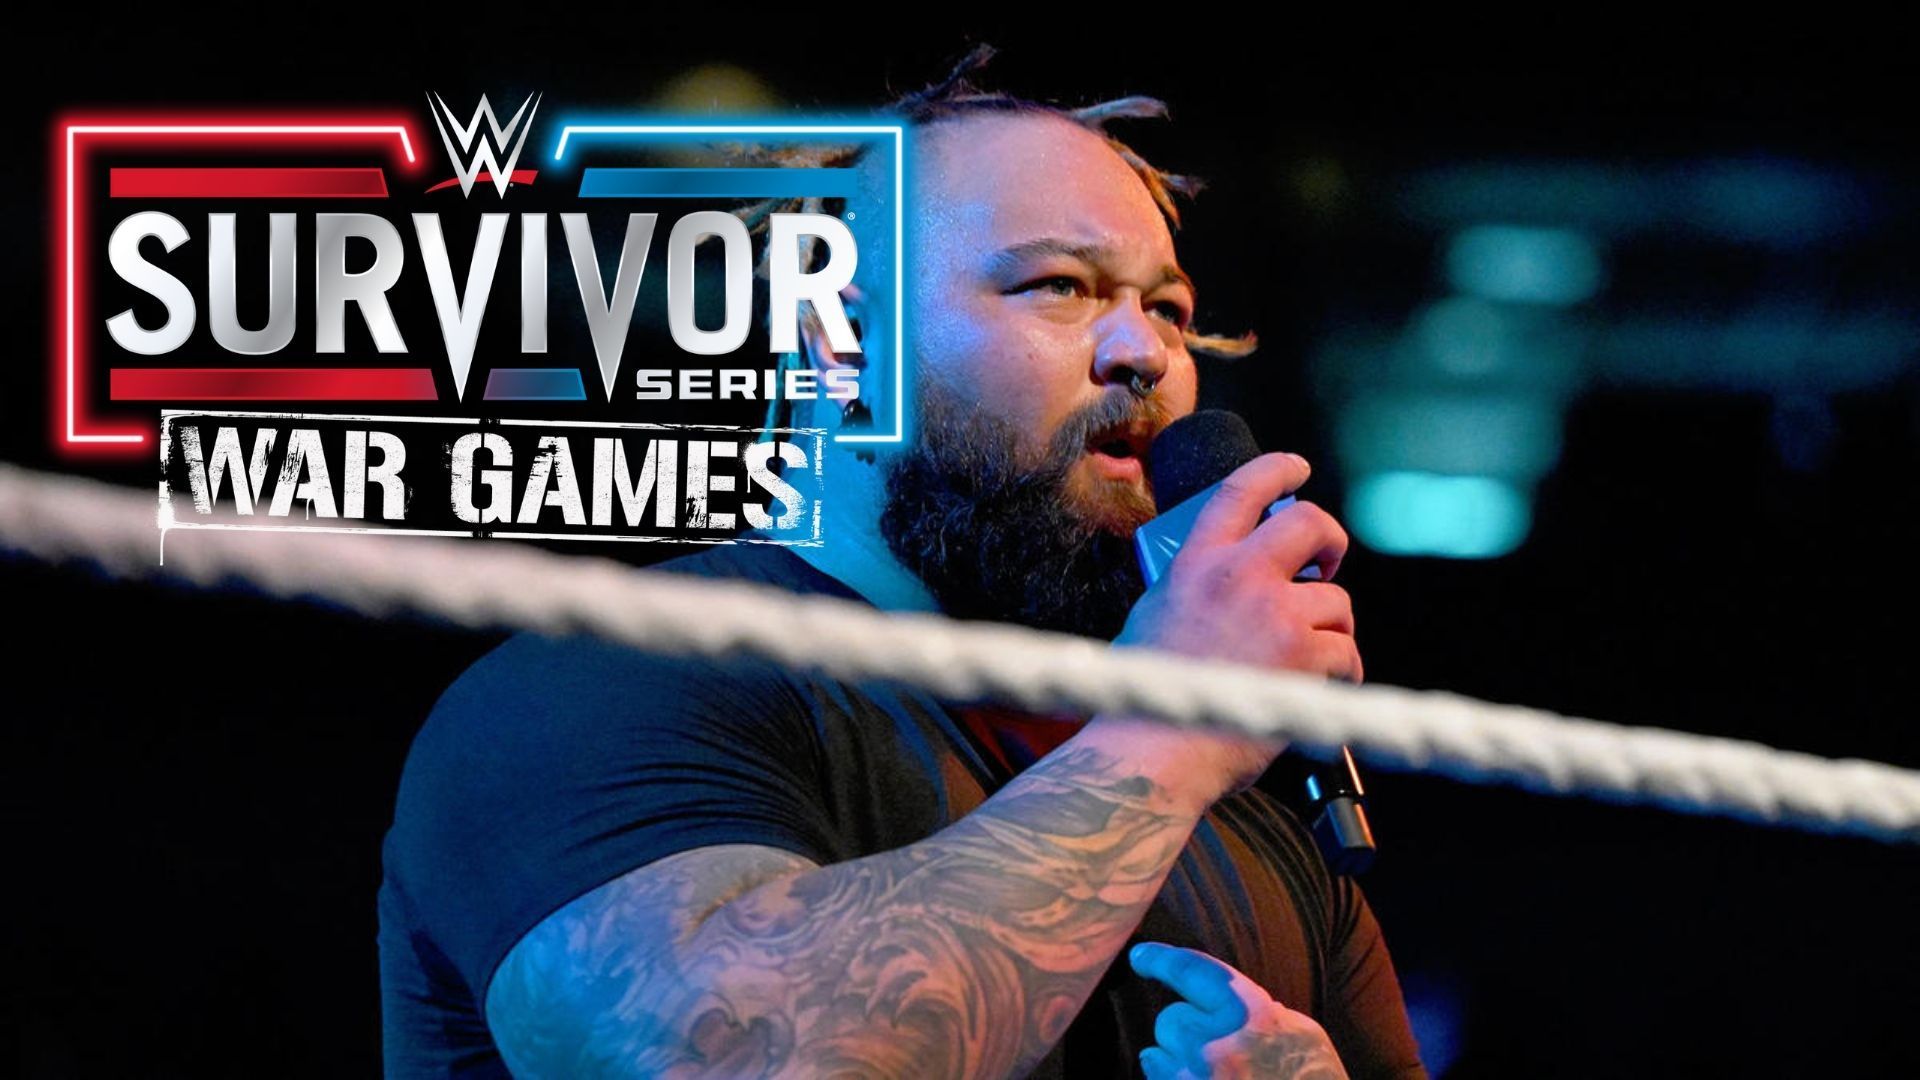 Bray Wyatt recently made his return to WWE.